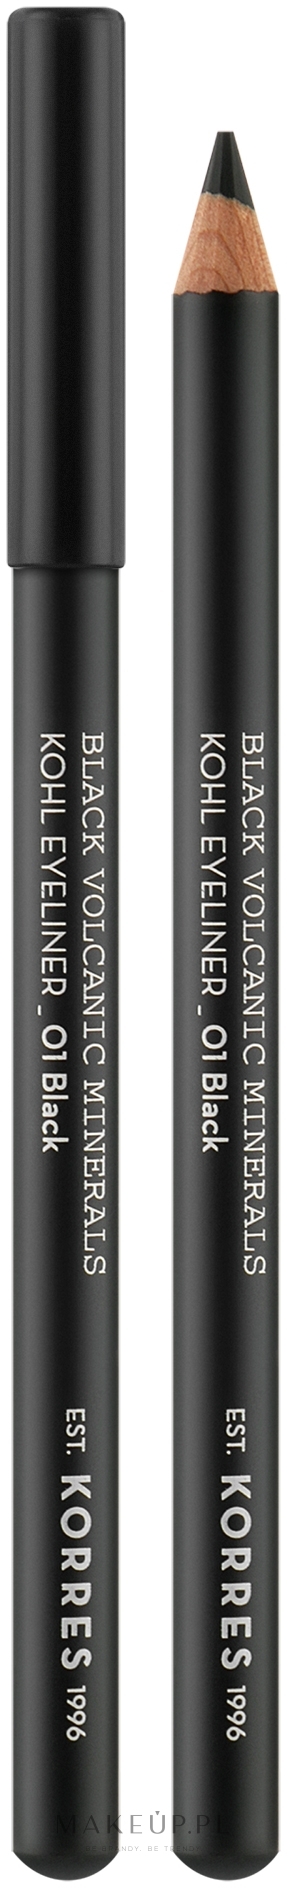 Eyeliner do oczu - Korres Black Volcanic Minerals Professional Khol Eyeliner — Zdjęcie 1.14 g